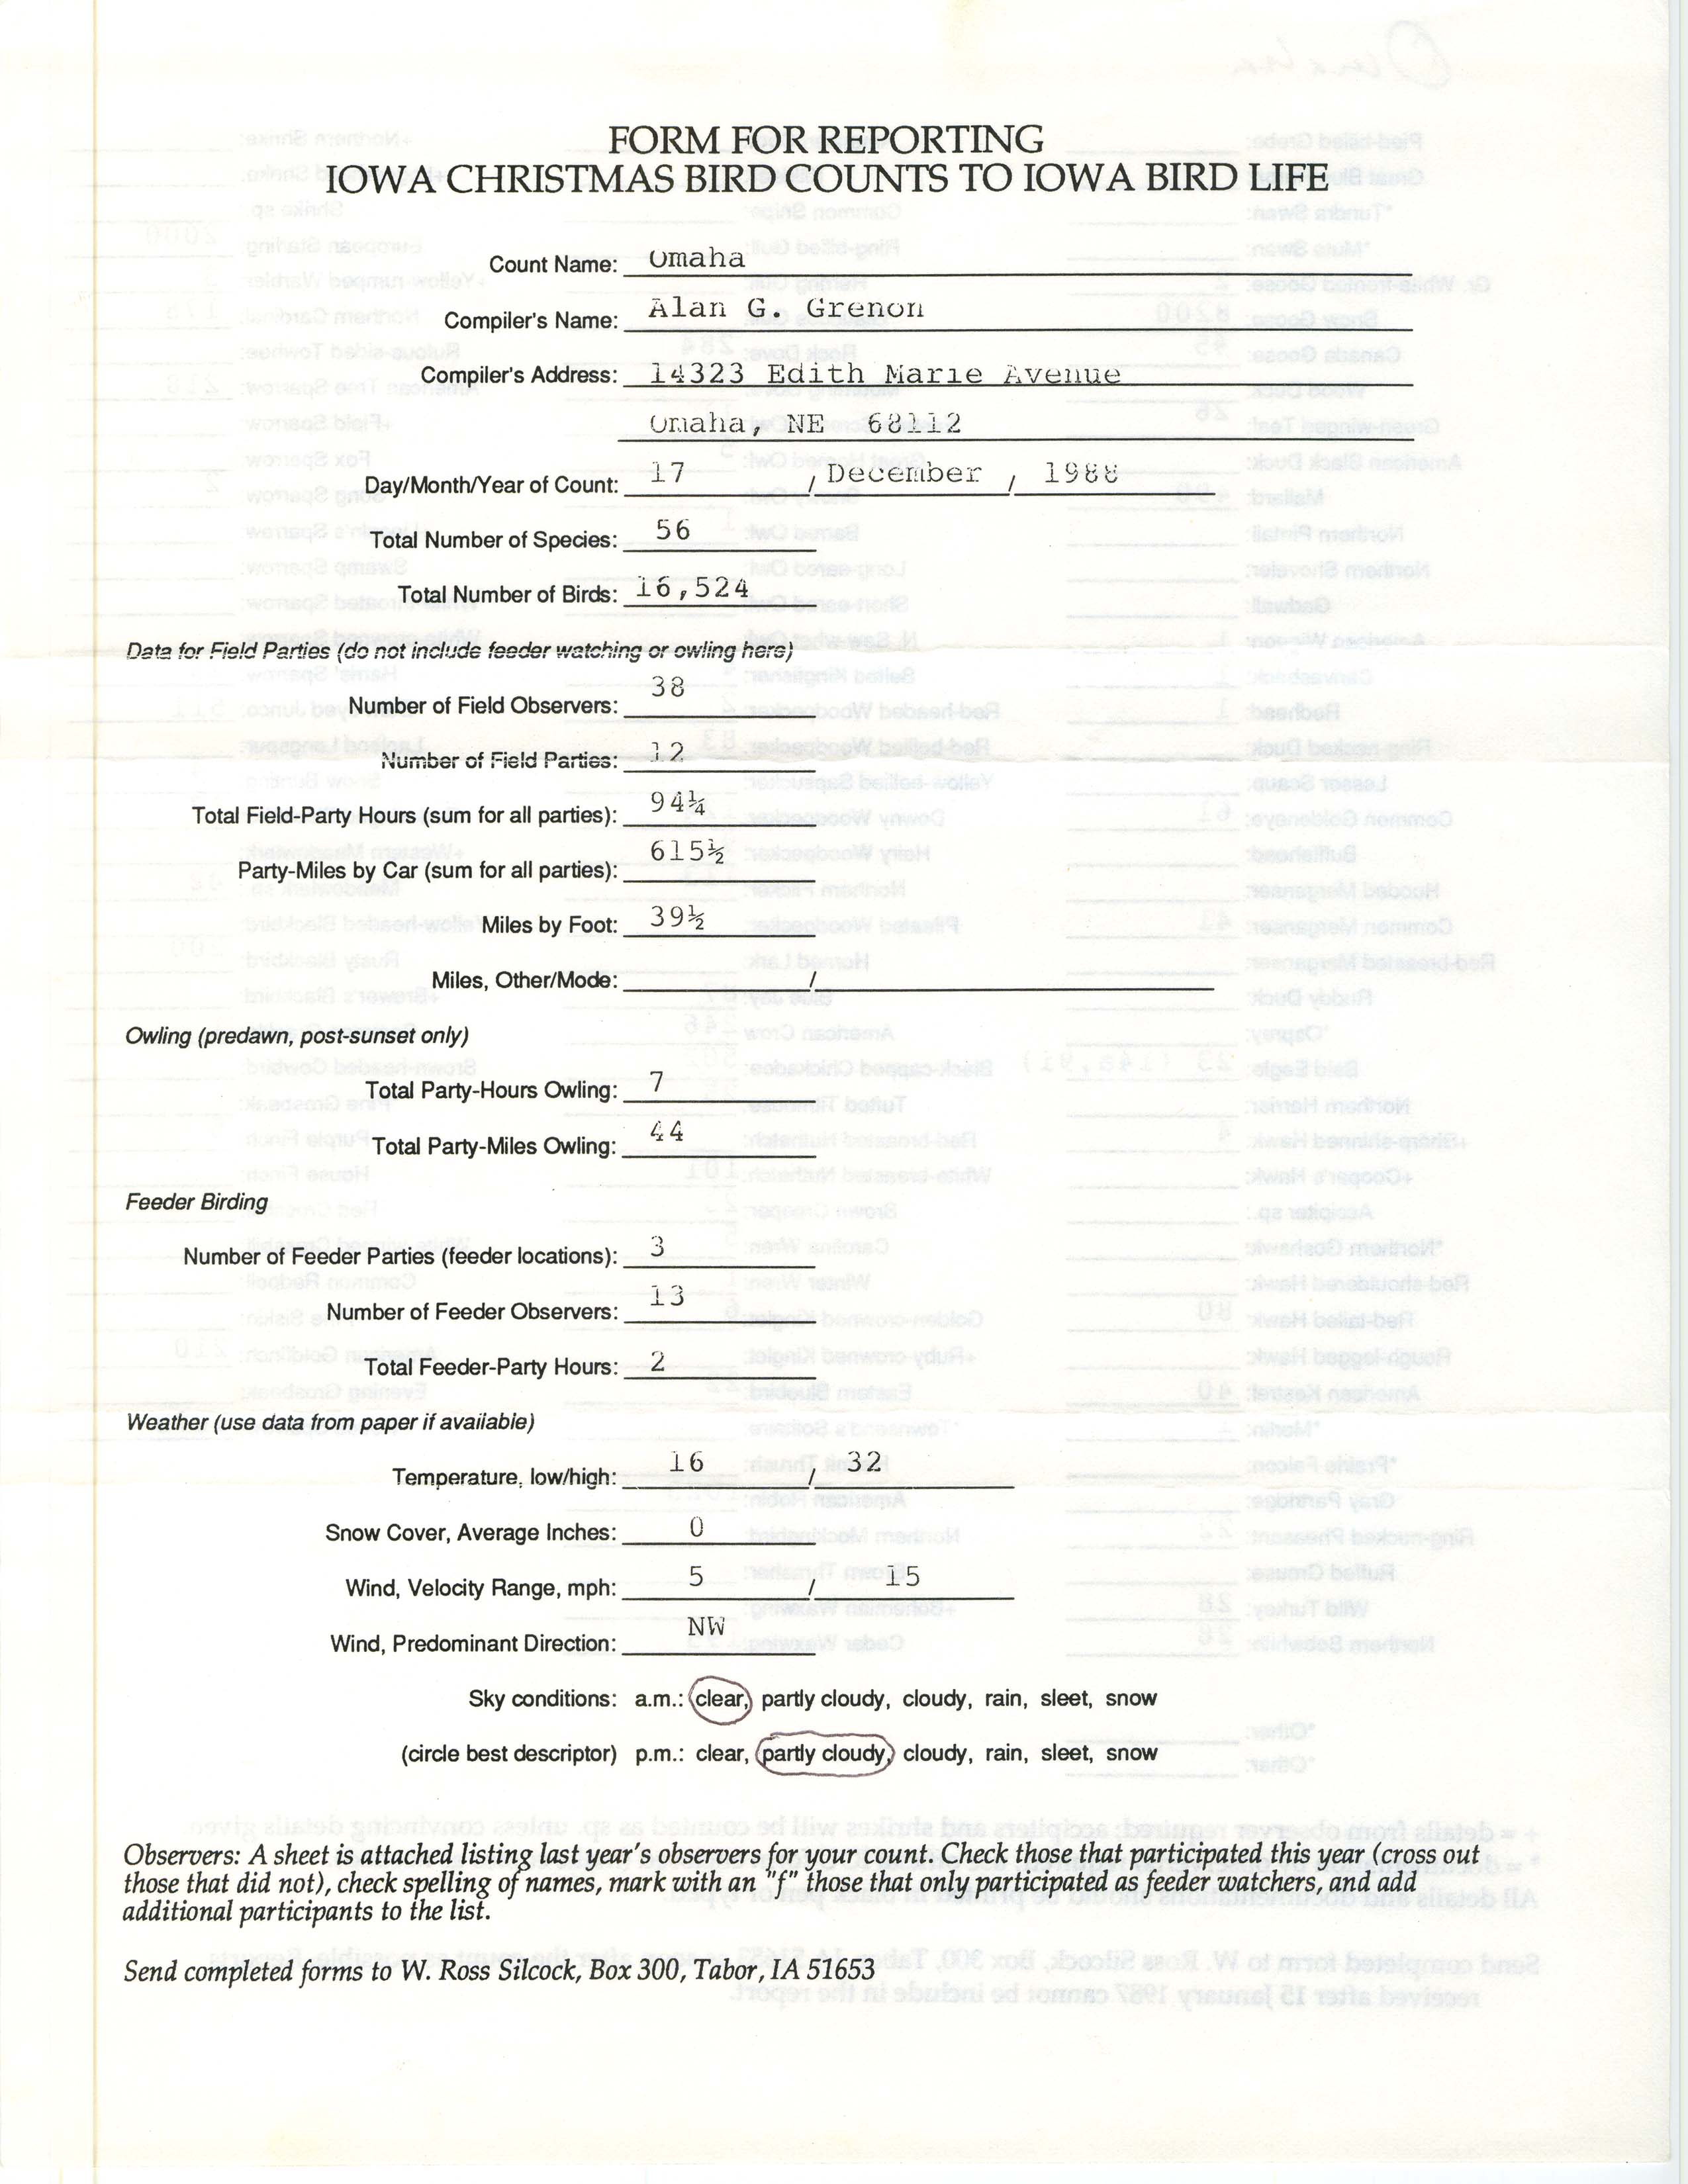 Form for reporting Iowa Christmas bird counts to Iowa Bird Life, Alan G. Grenon, December 17, 1988